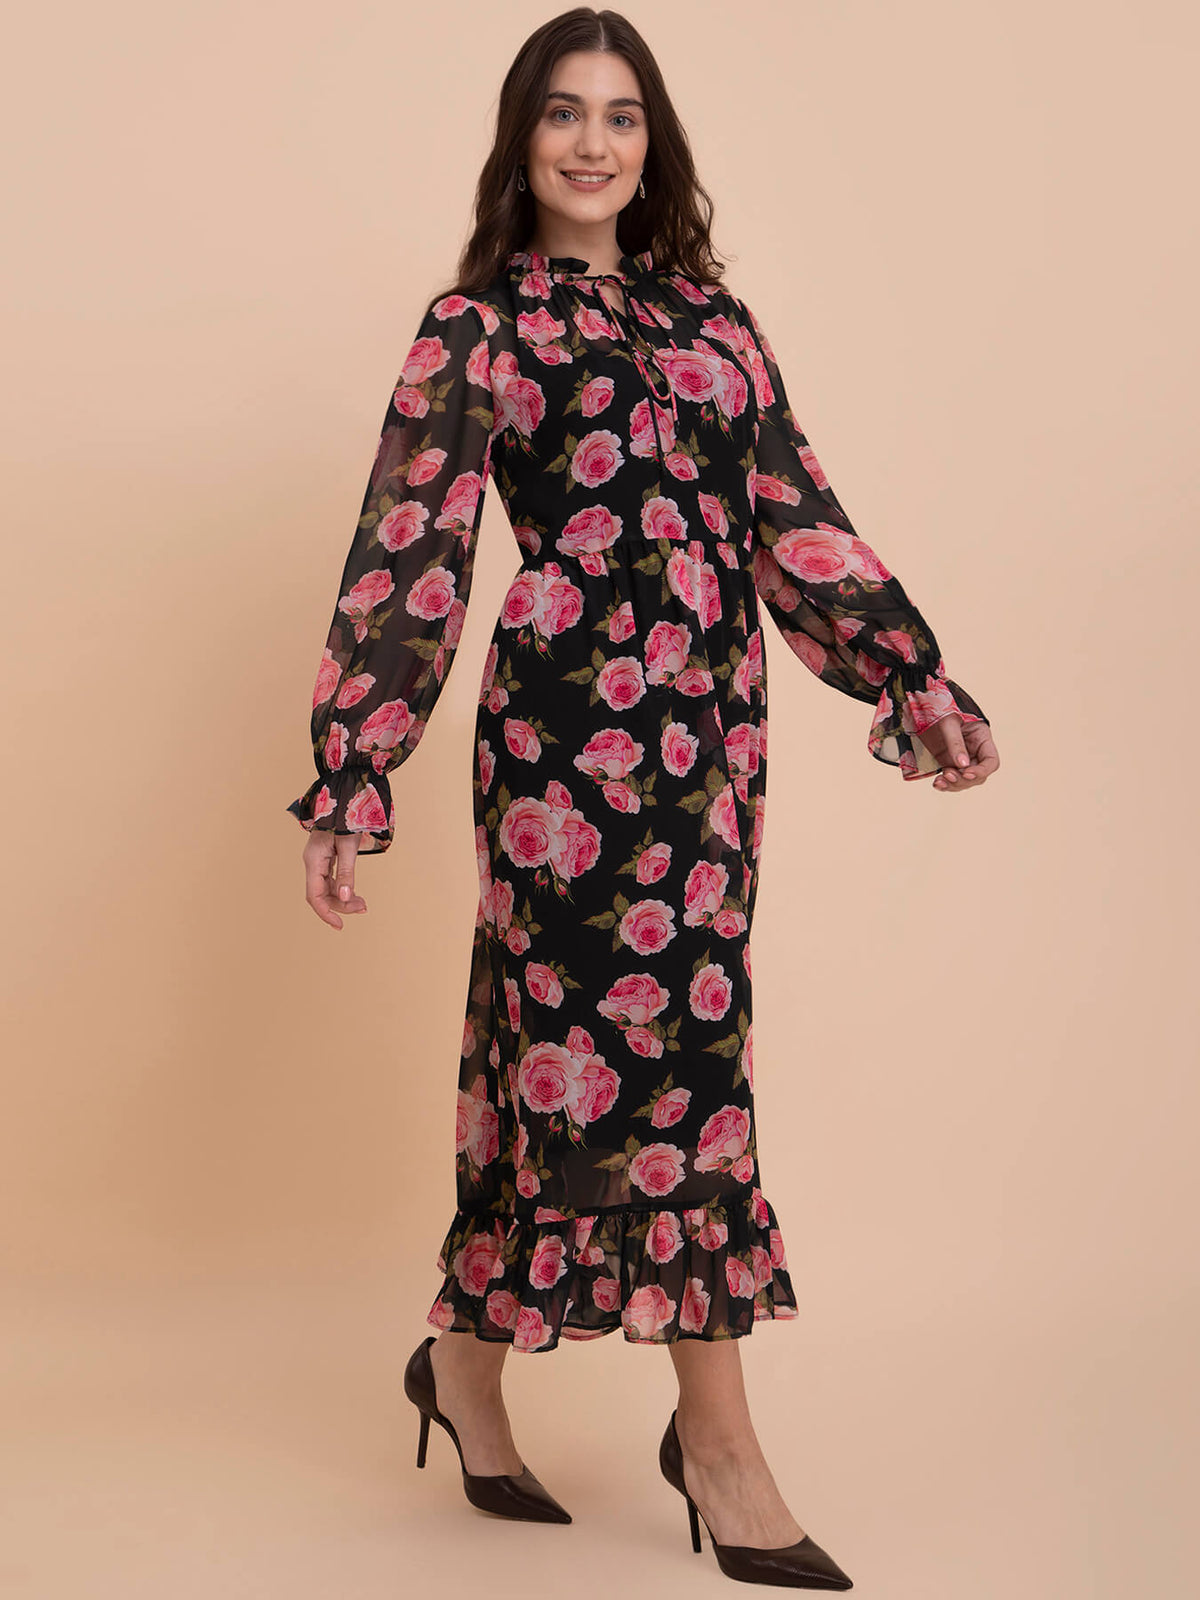 Floral Print A-Line Midi Dress - Black and Pink